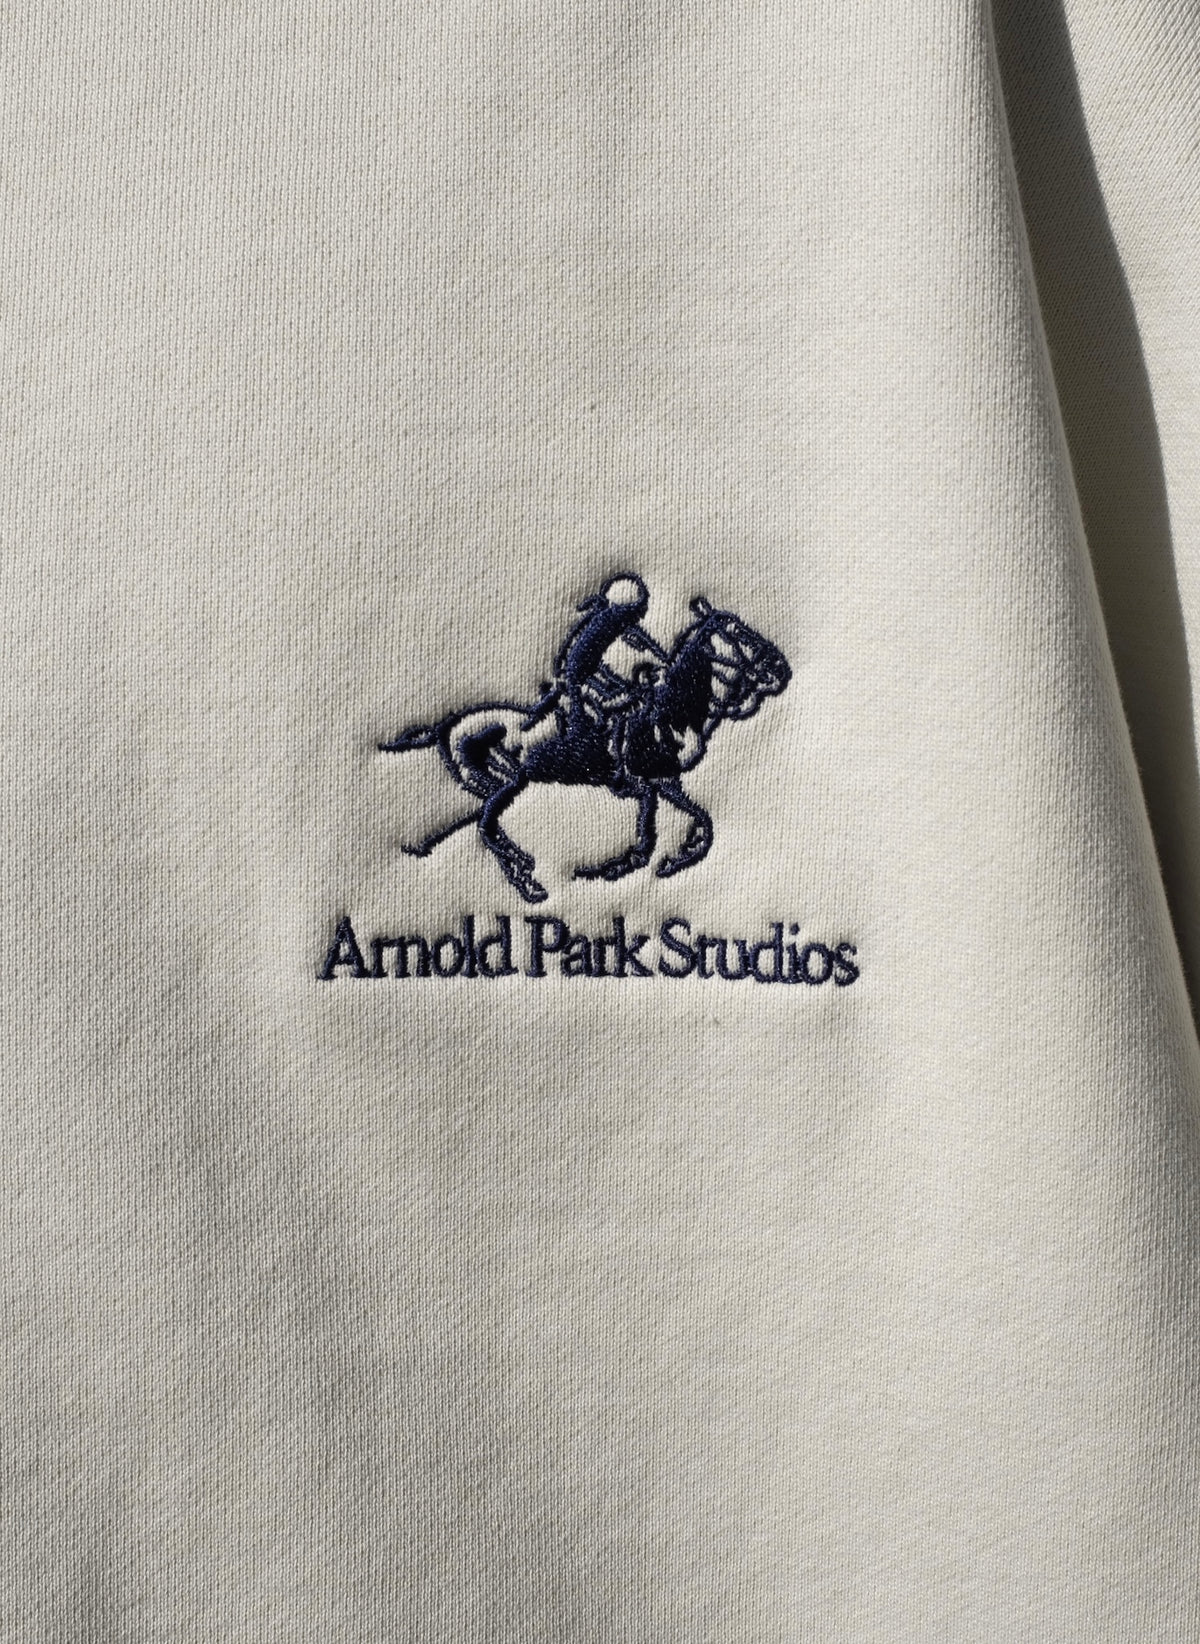 ARNOLD PARK STUDIOS / PONY LOGO CREW NECK ANTIQUE WHITE